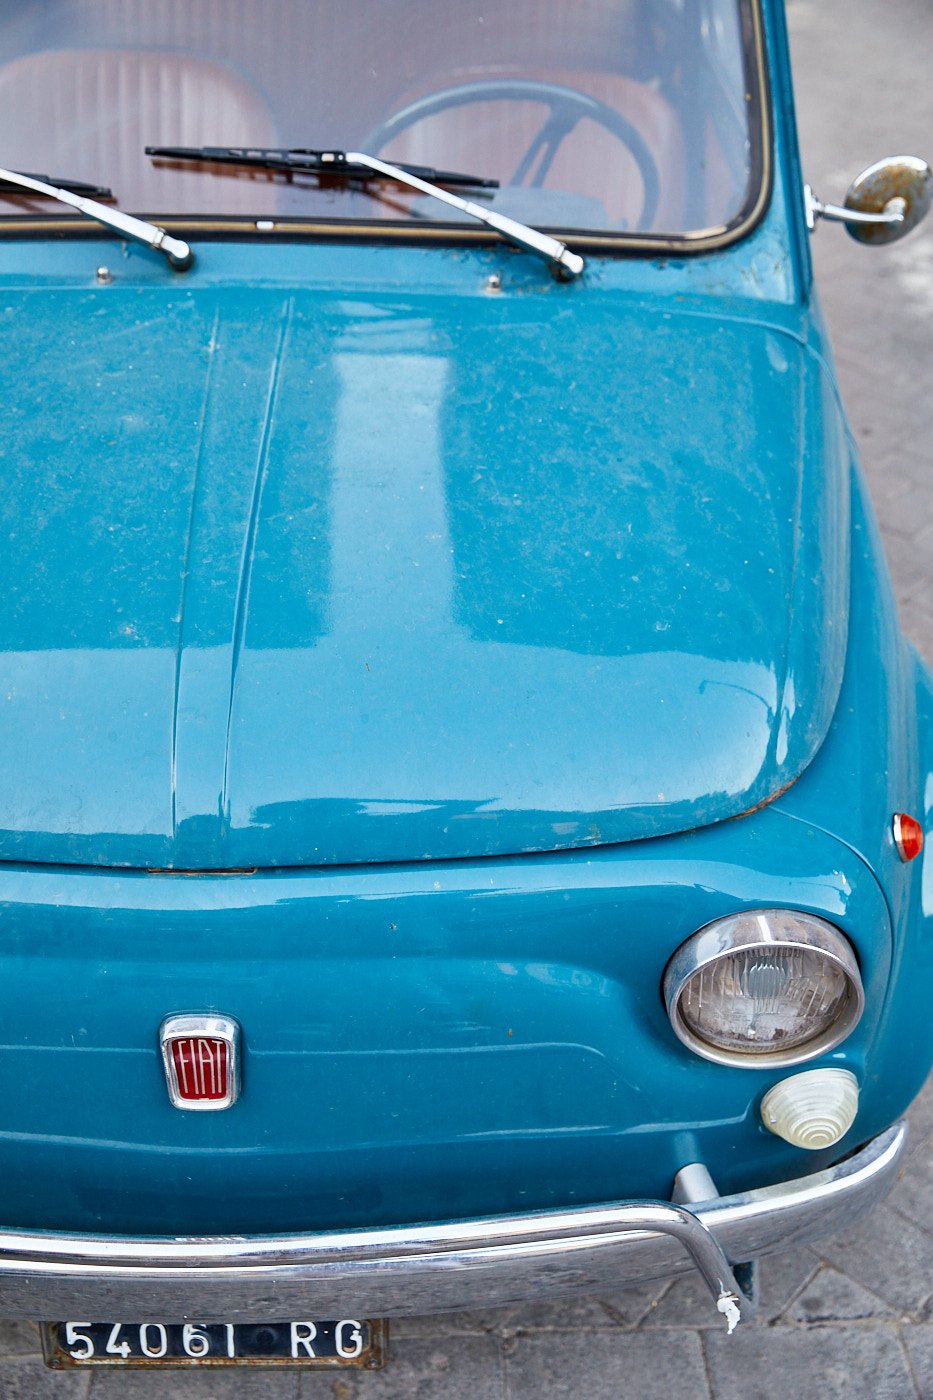 Blue Fiat.jpg